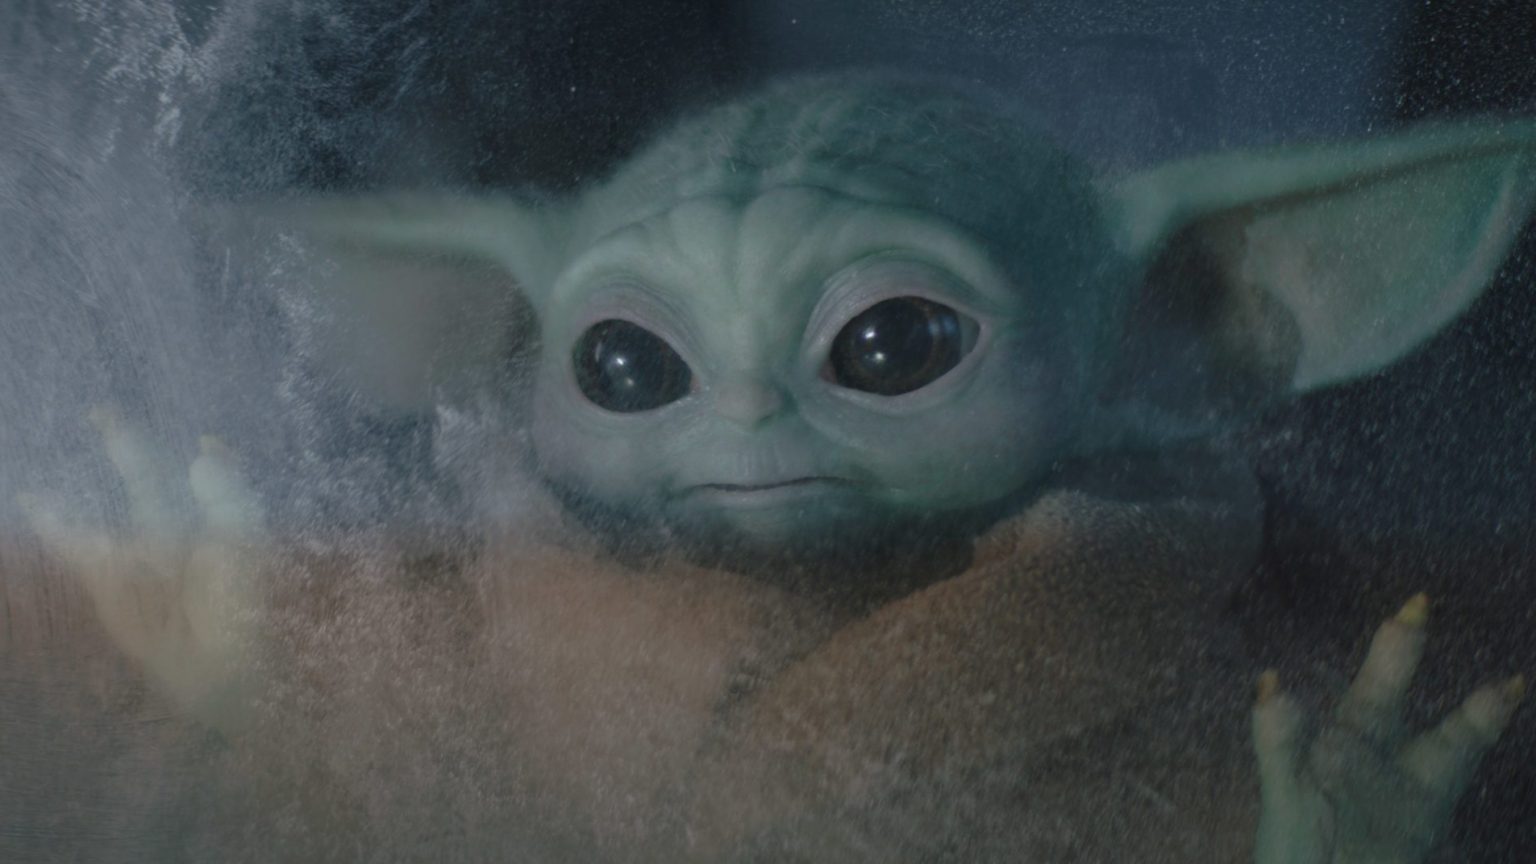 Baby Yoda looking outside of a frozen window as seen in Chapter 10 of The Mandalorian.